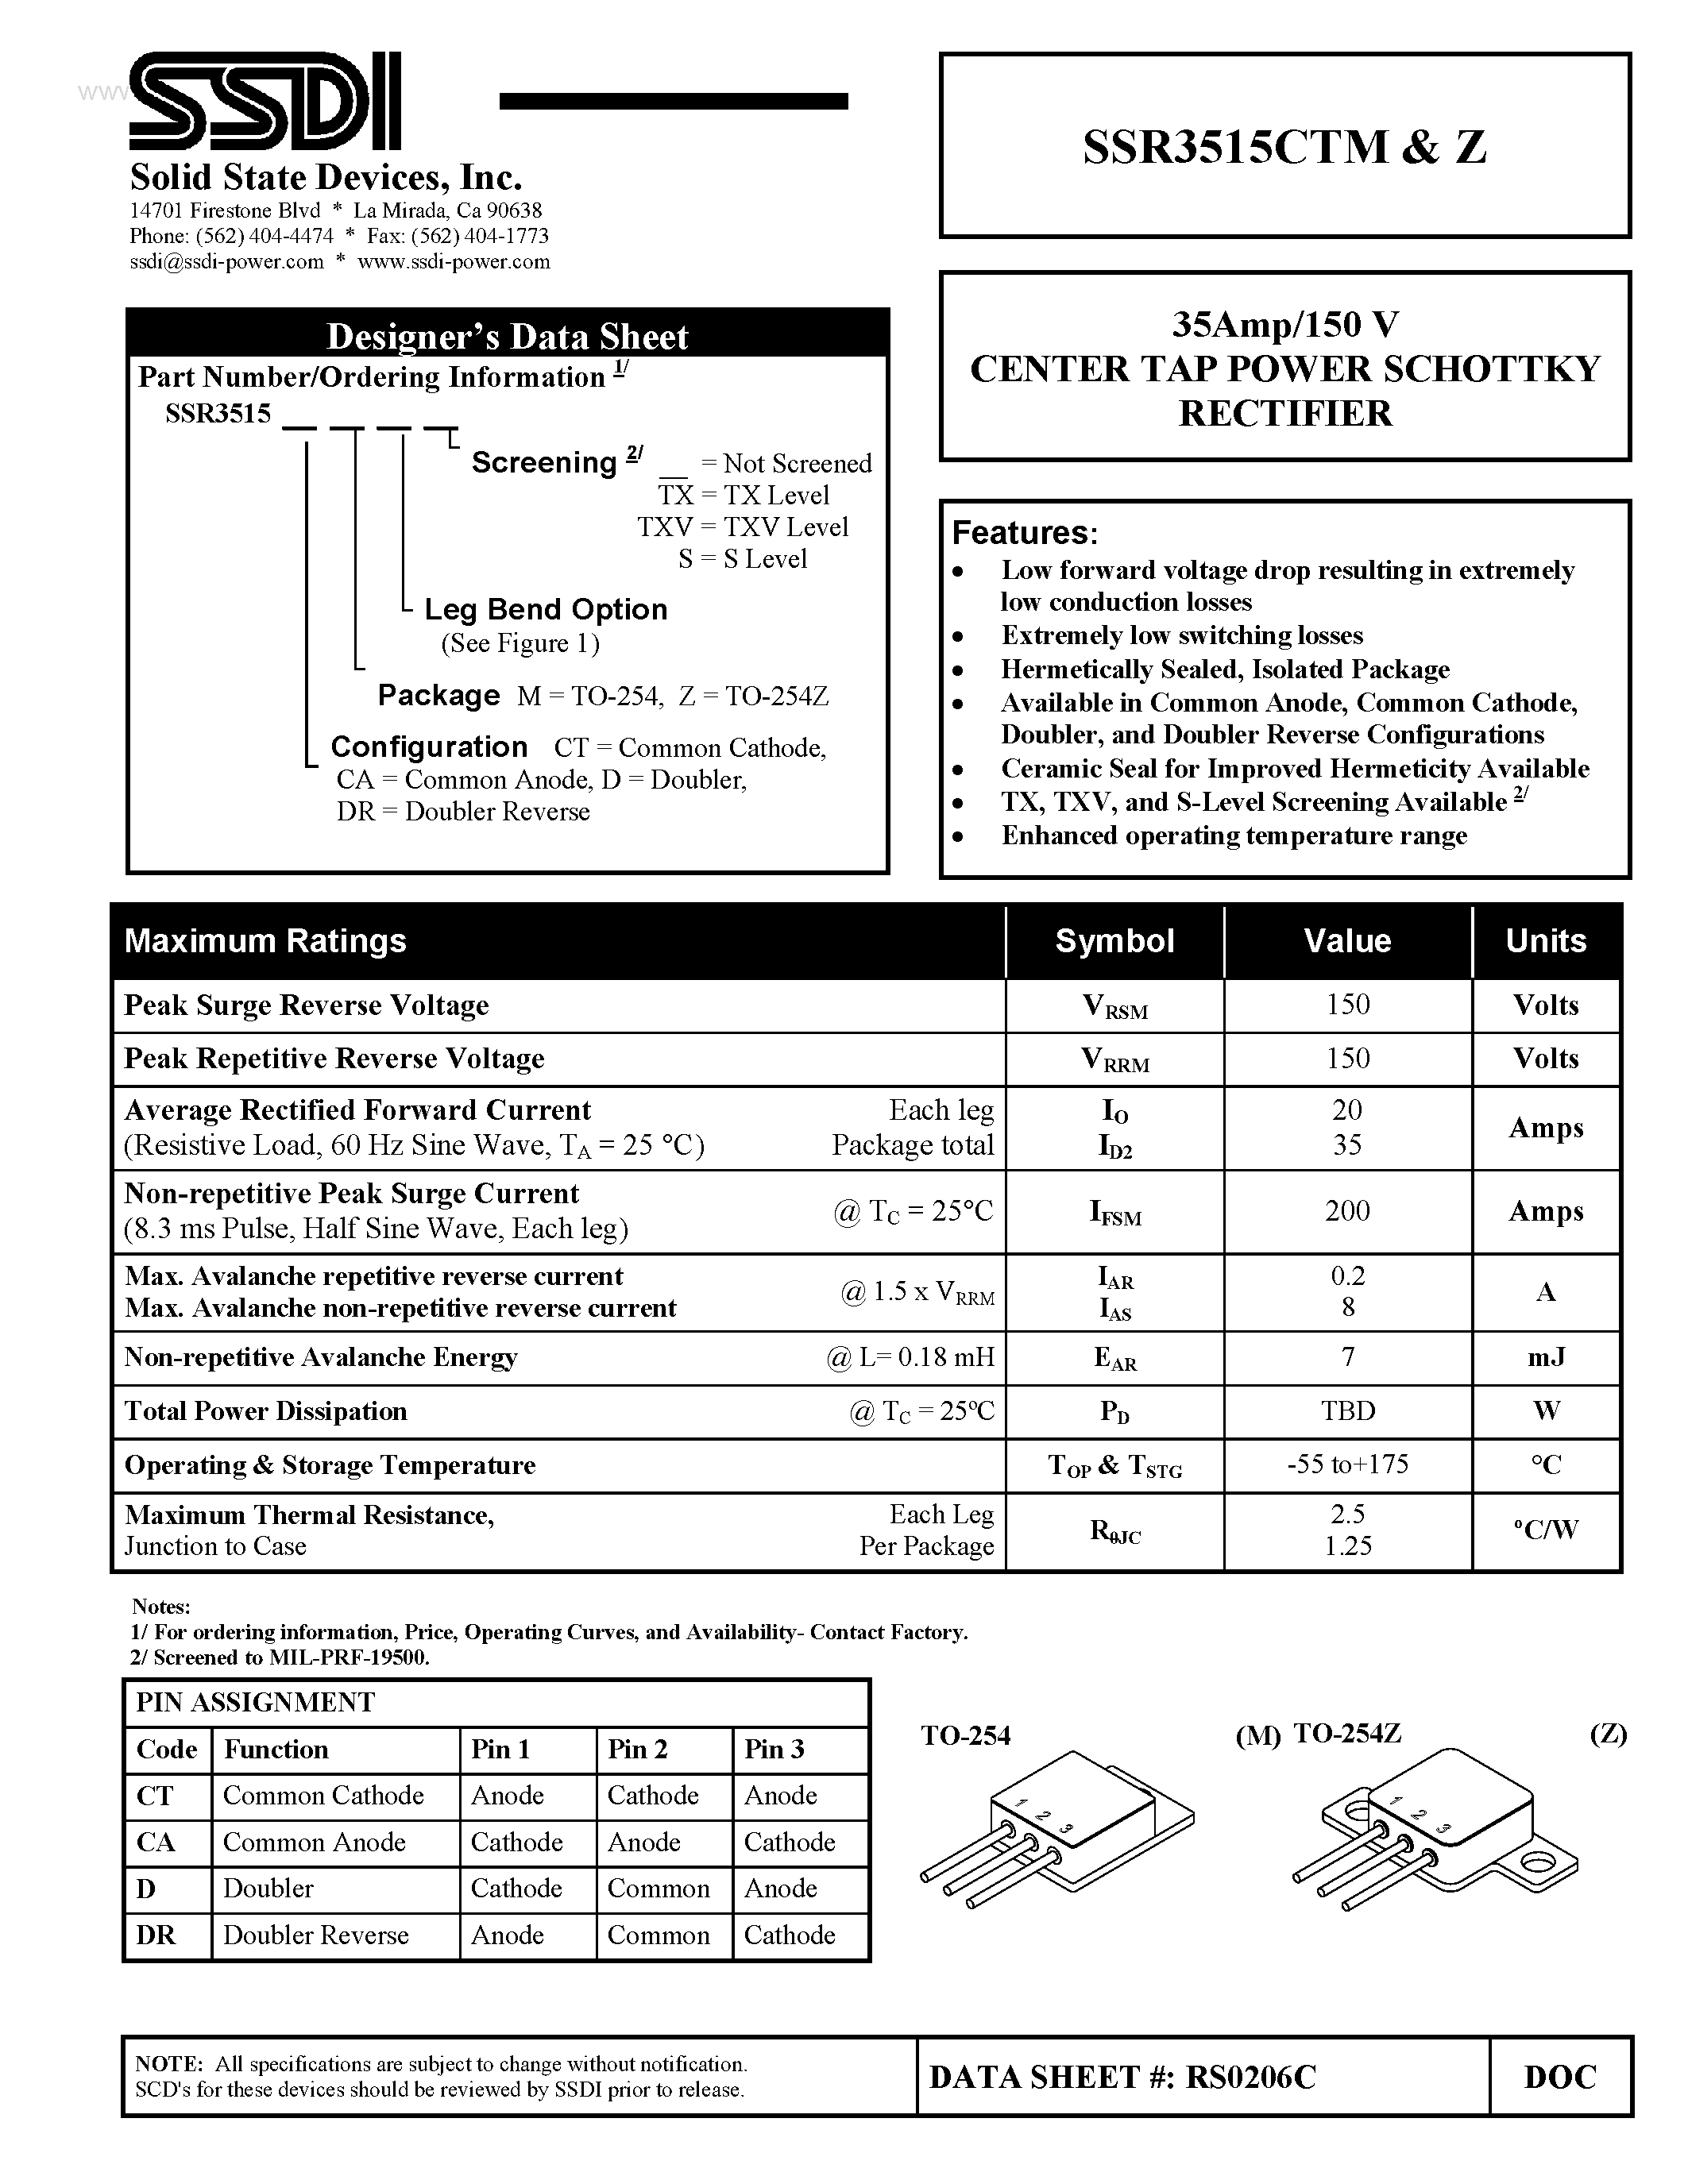 Datasheet SSR3515CTM - (SSR3515CTM/Z) CENTER TAP POWER SCHOTTKY RECTIFIER page 1